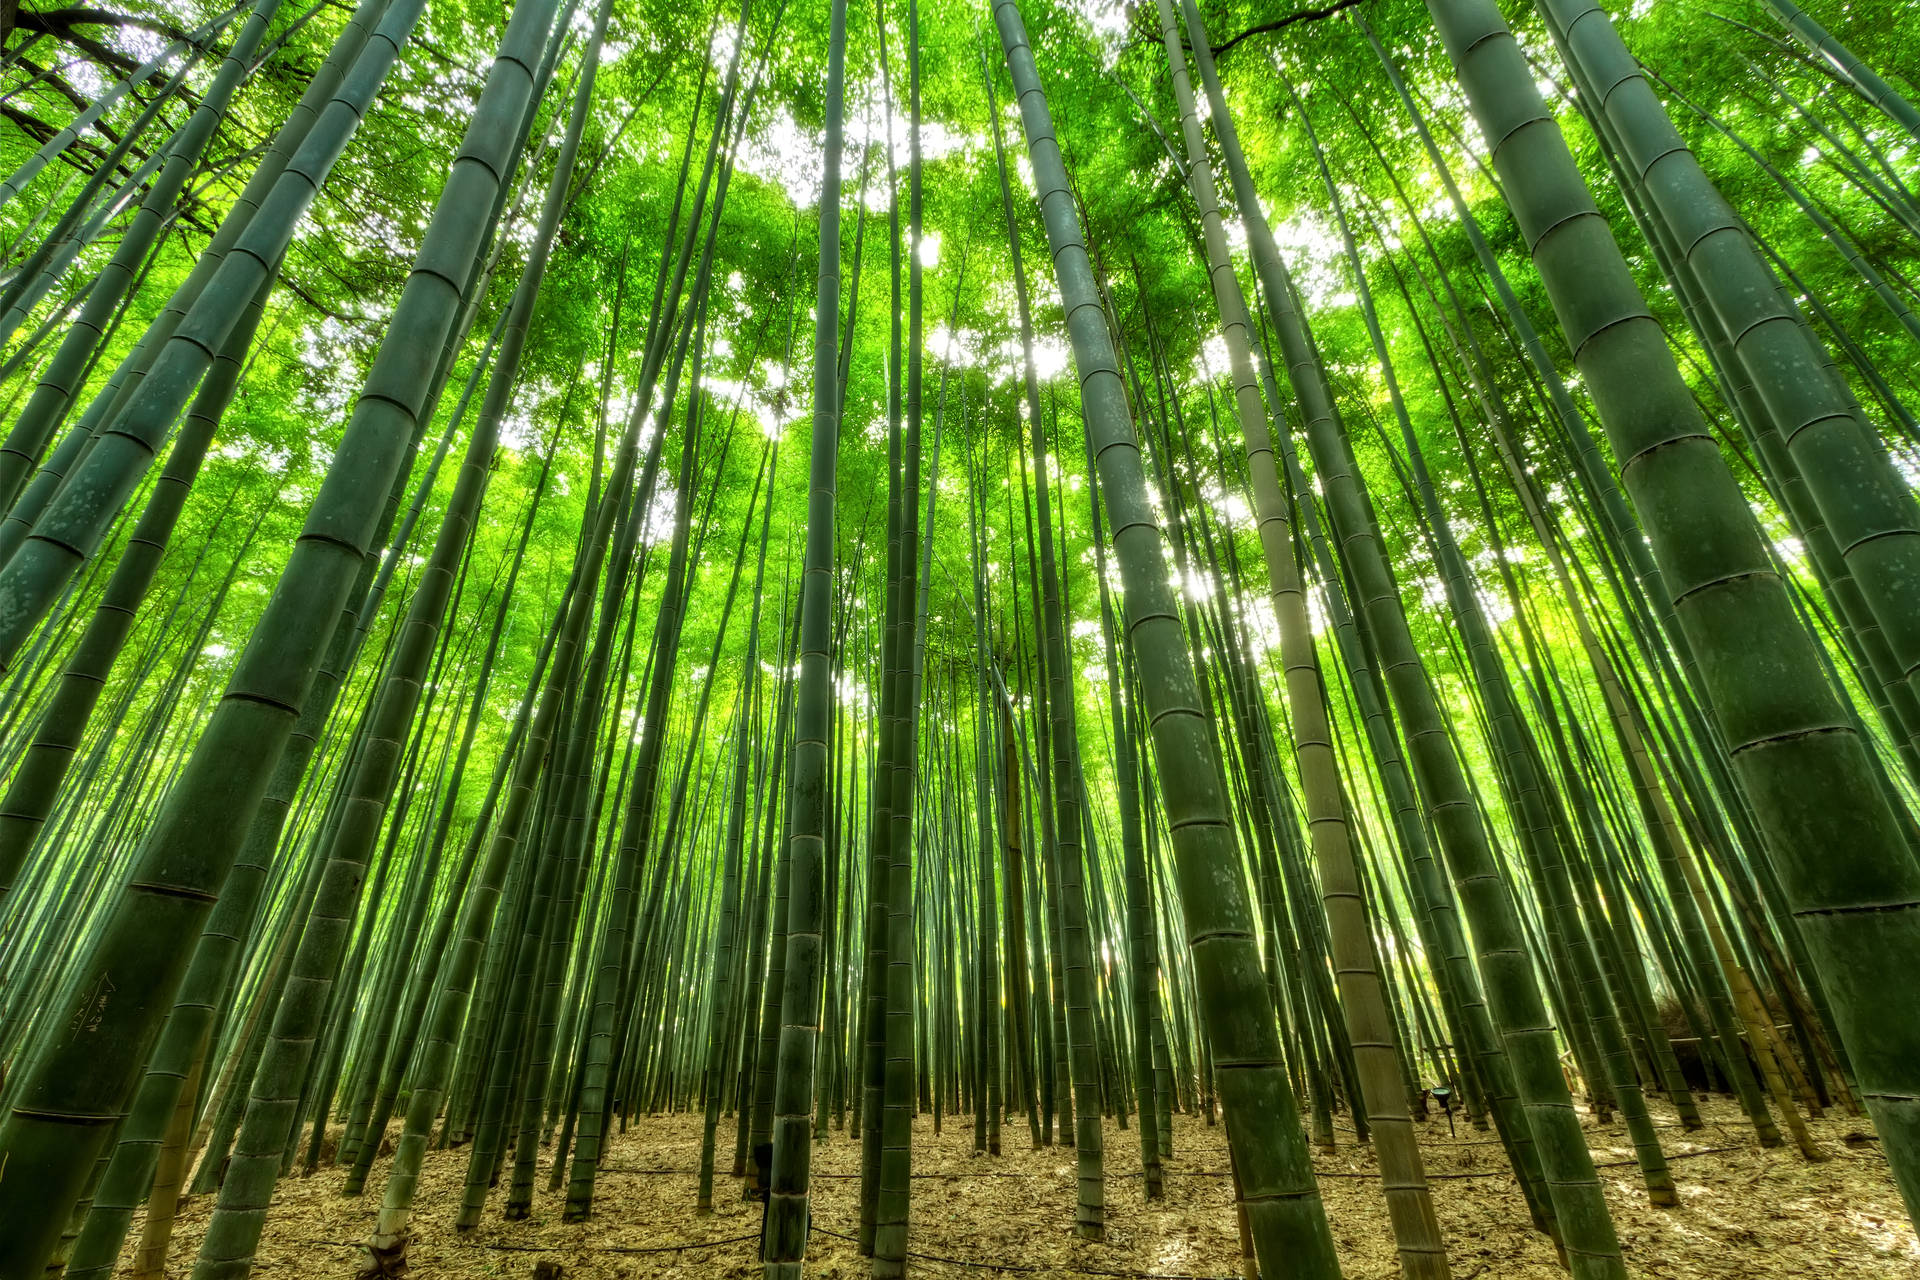 Bamboo Grove Under The Sunlight